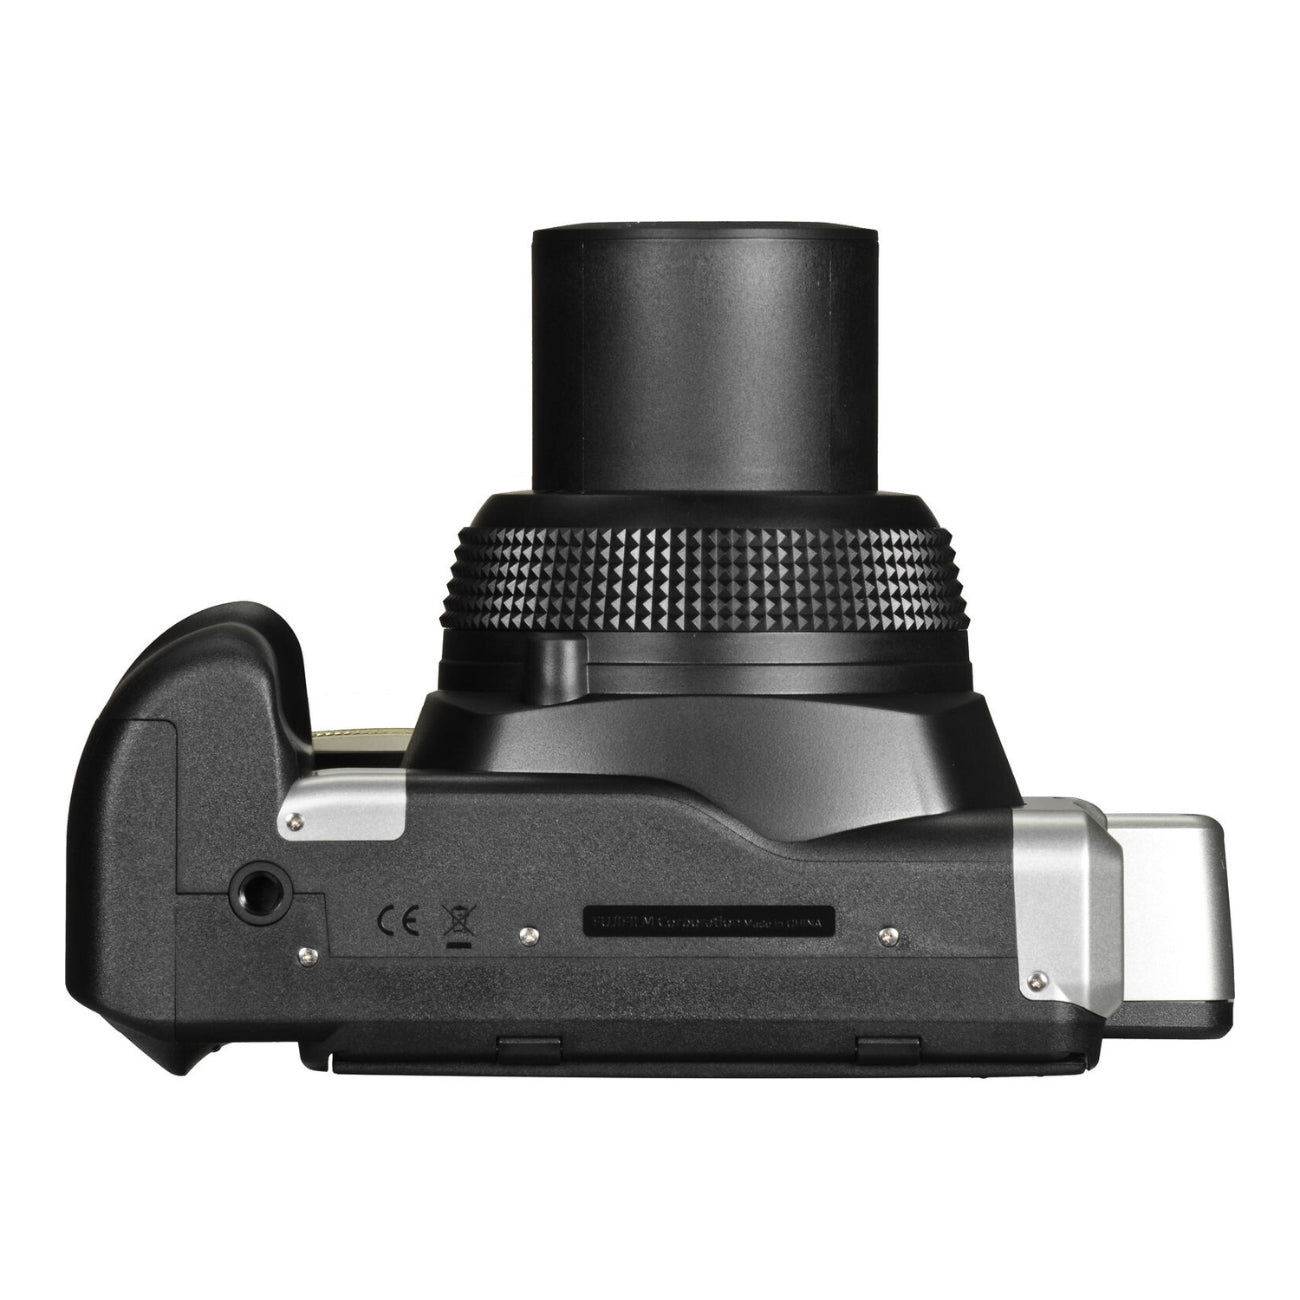 FUJIFILM INSTAX Wide 300 Instant Film Camera (Black) - Bottom View